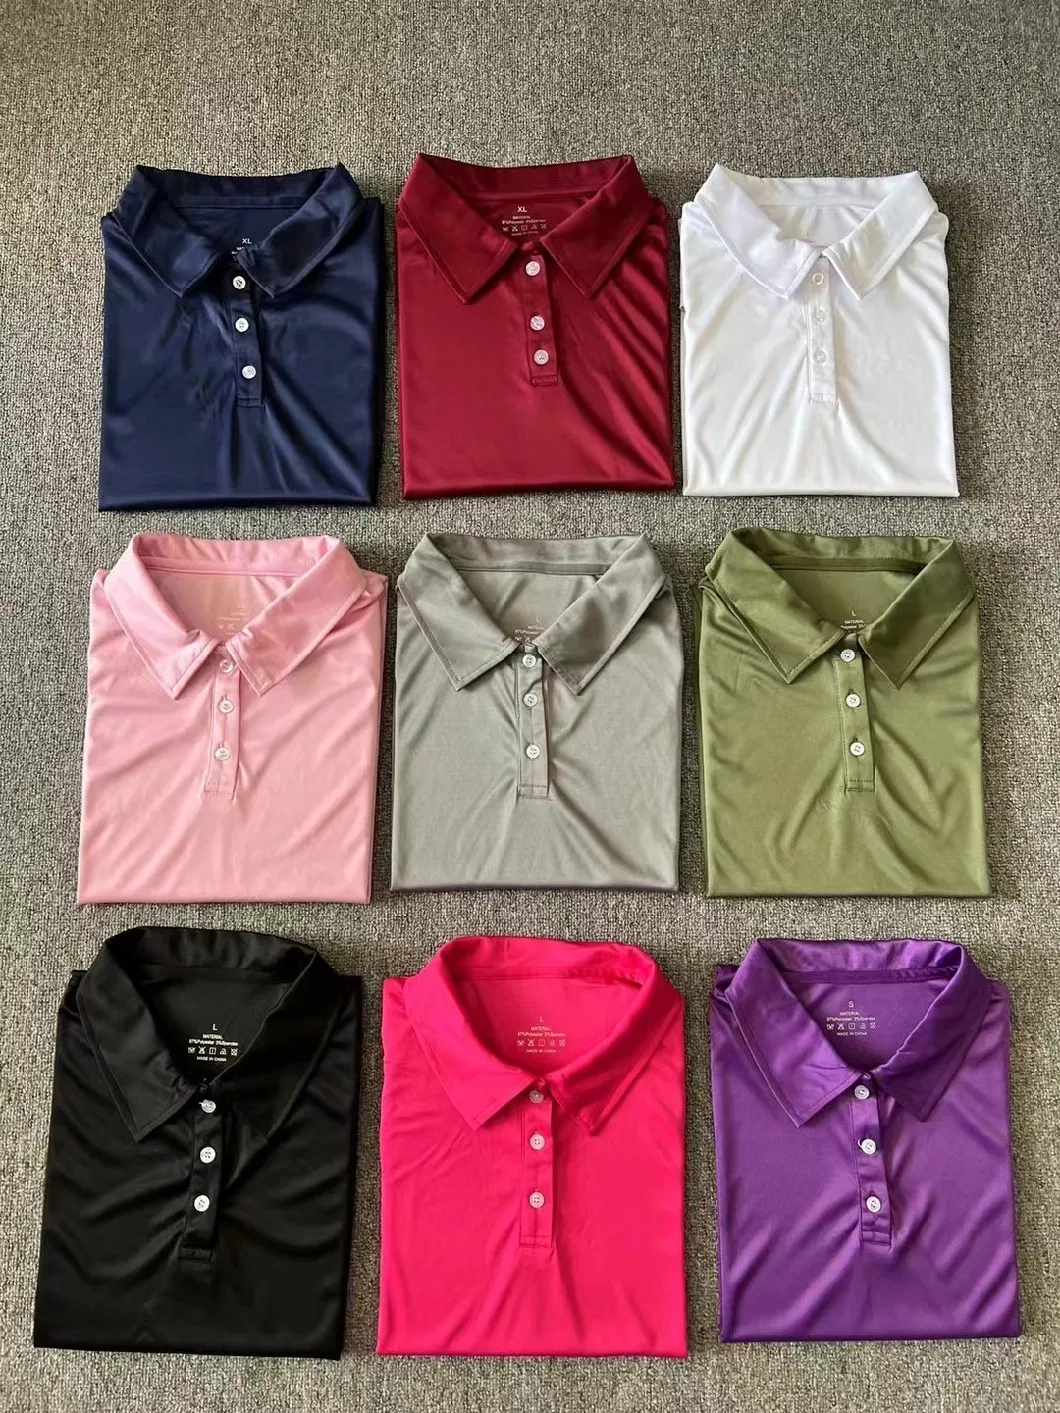 Stockpapa 9 Color Me′s Active Polo Shirts Apparel Stock